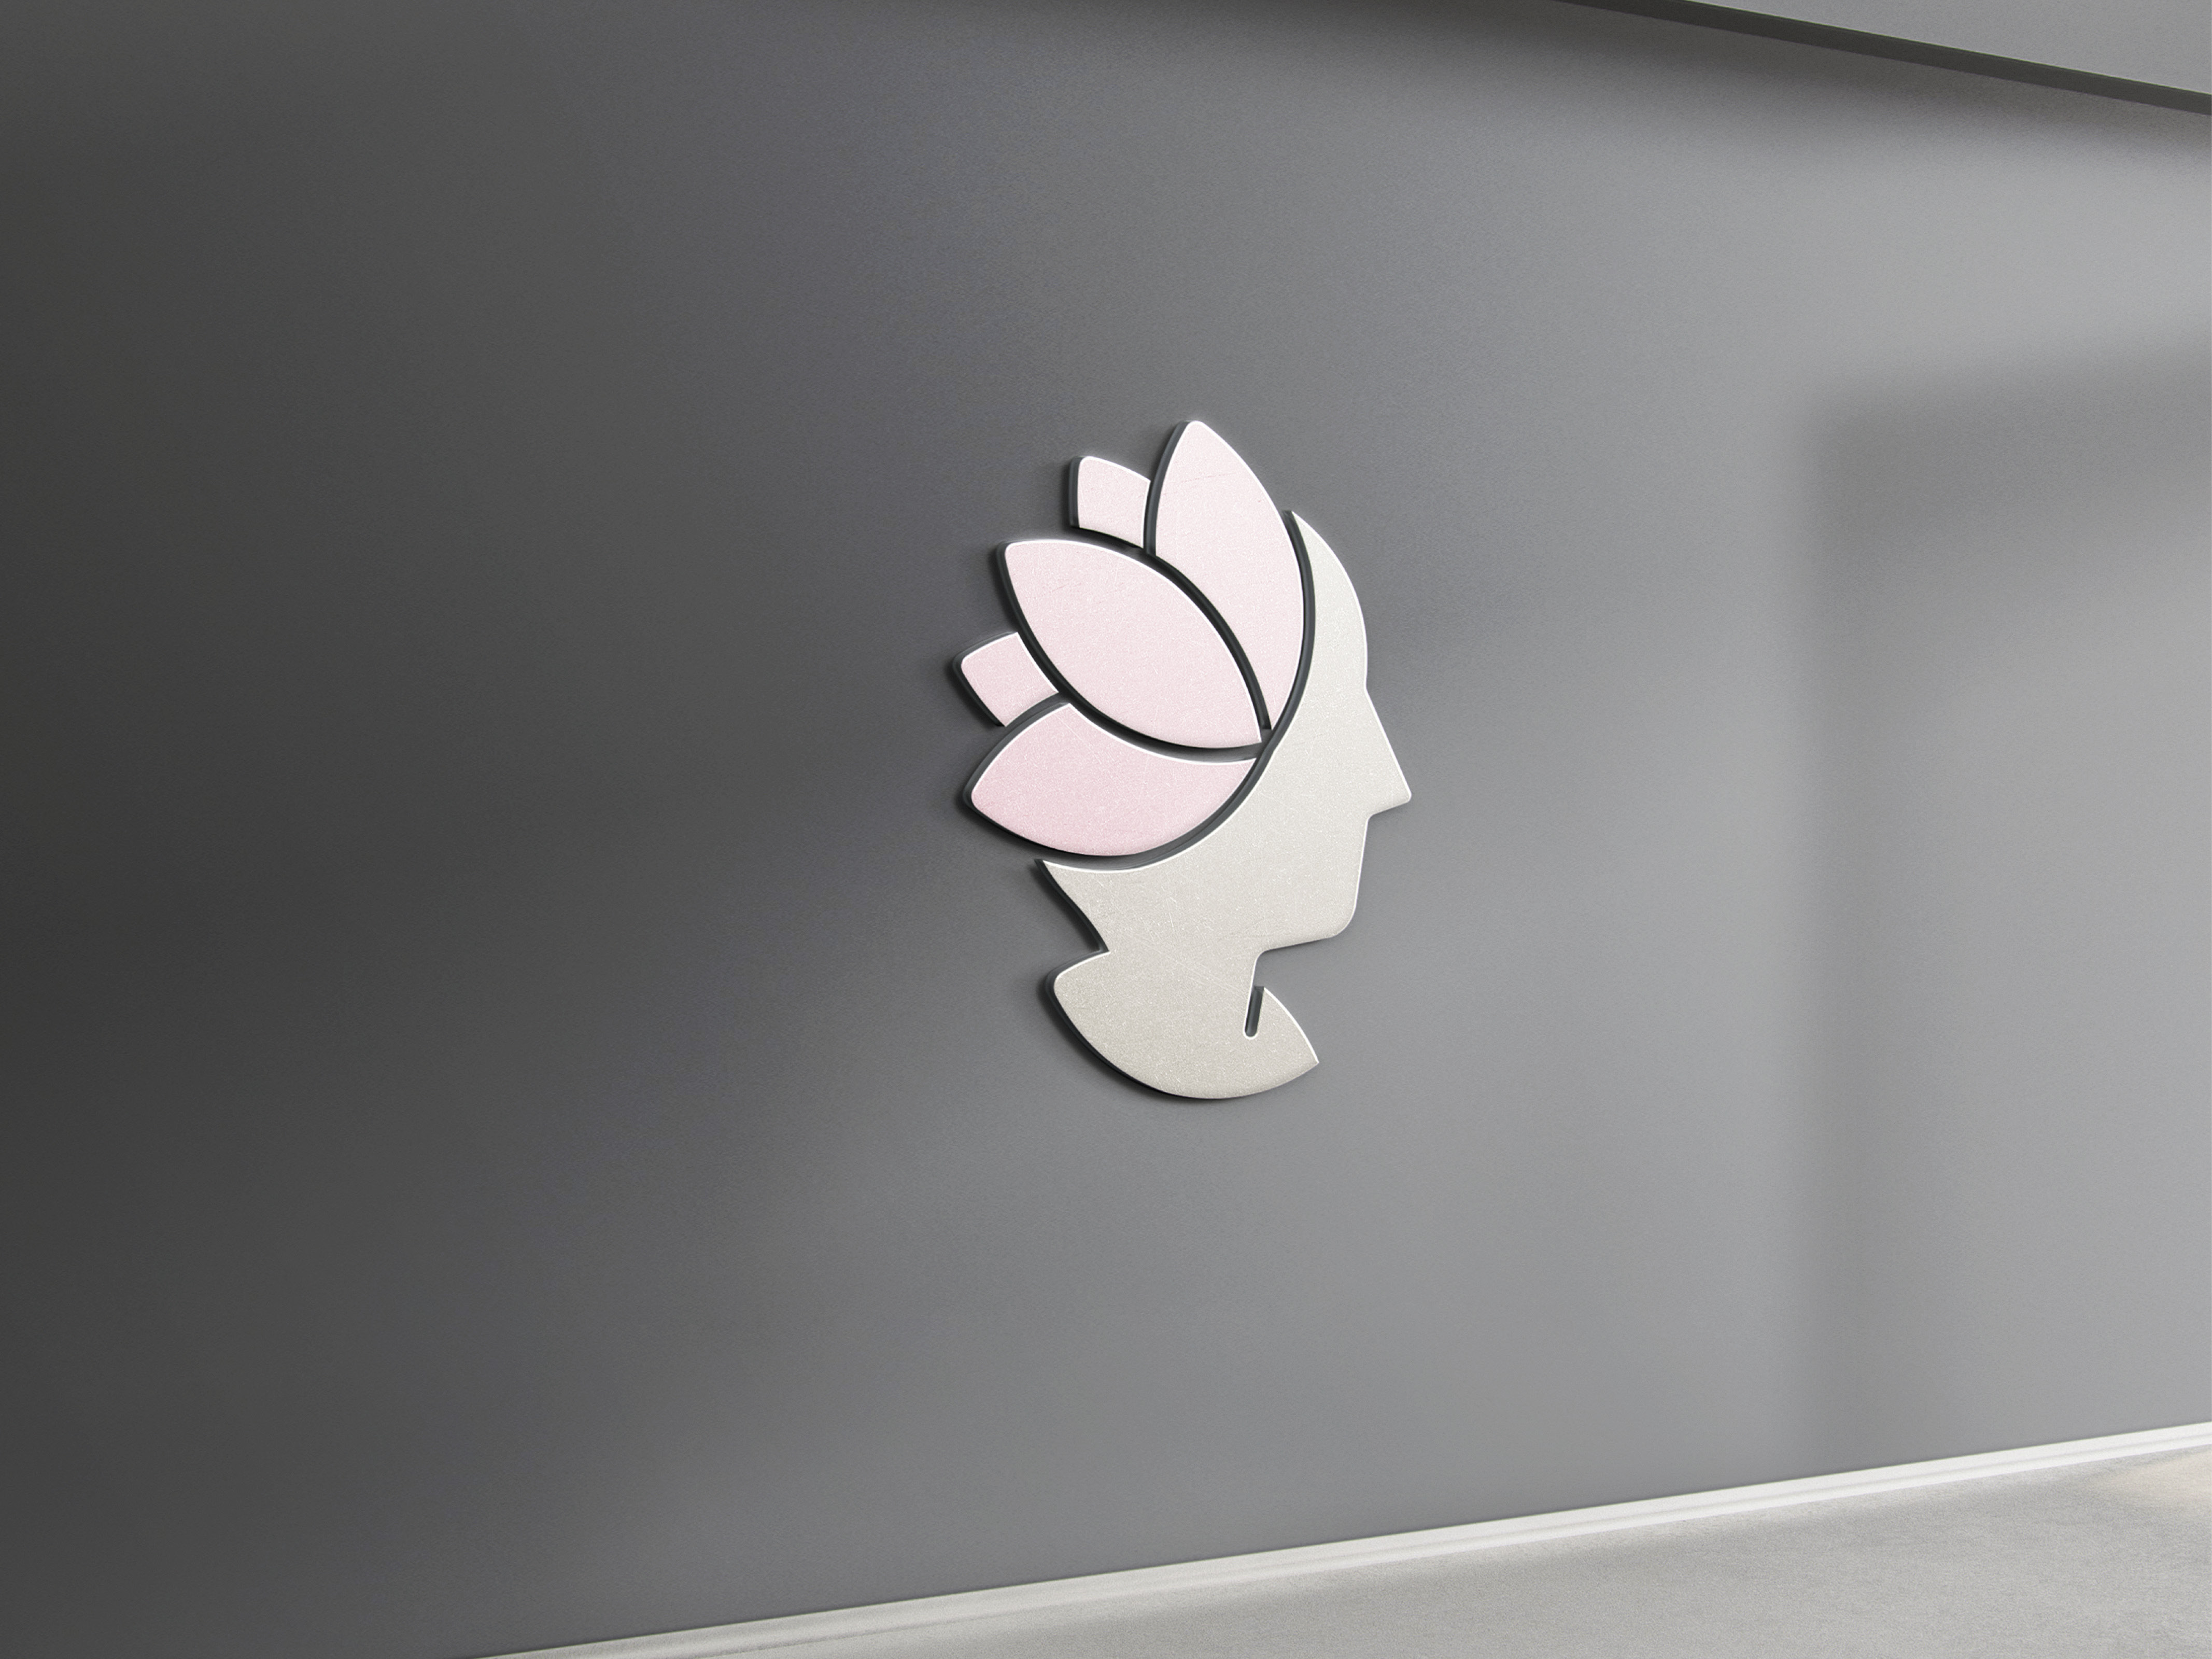 Indian Head Massage logo on wall